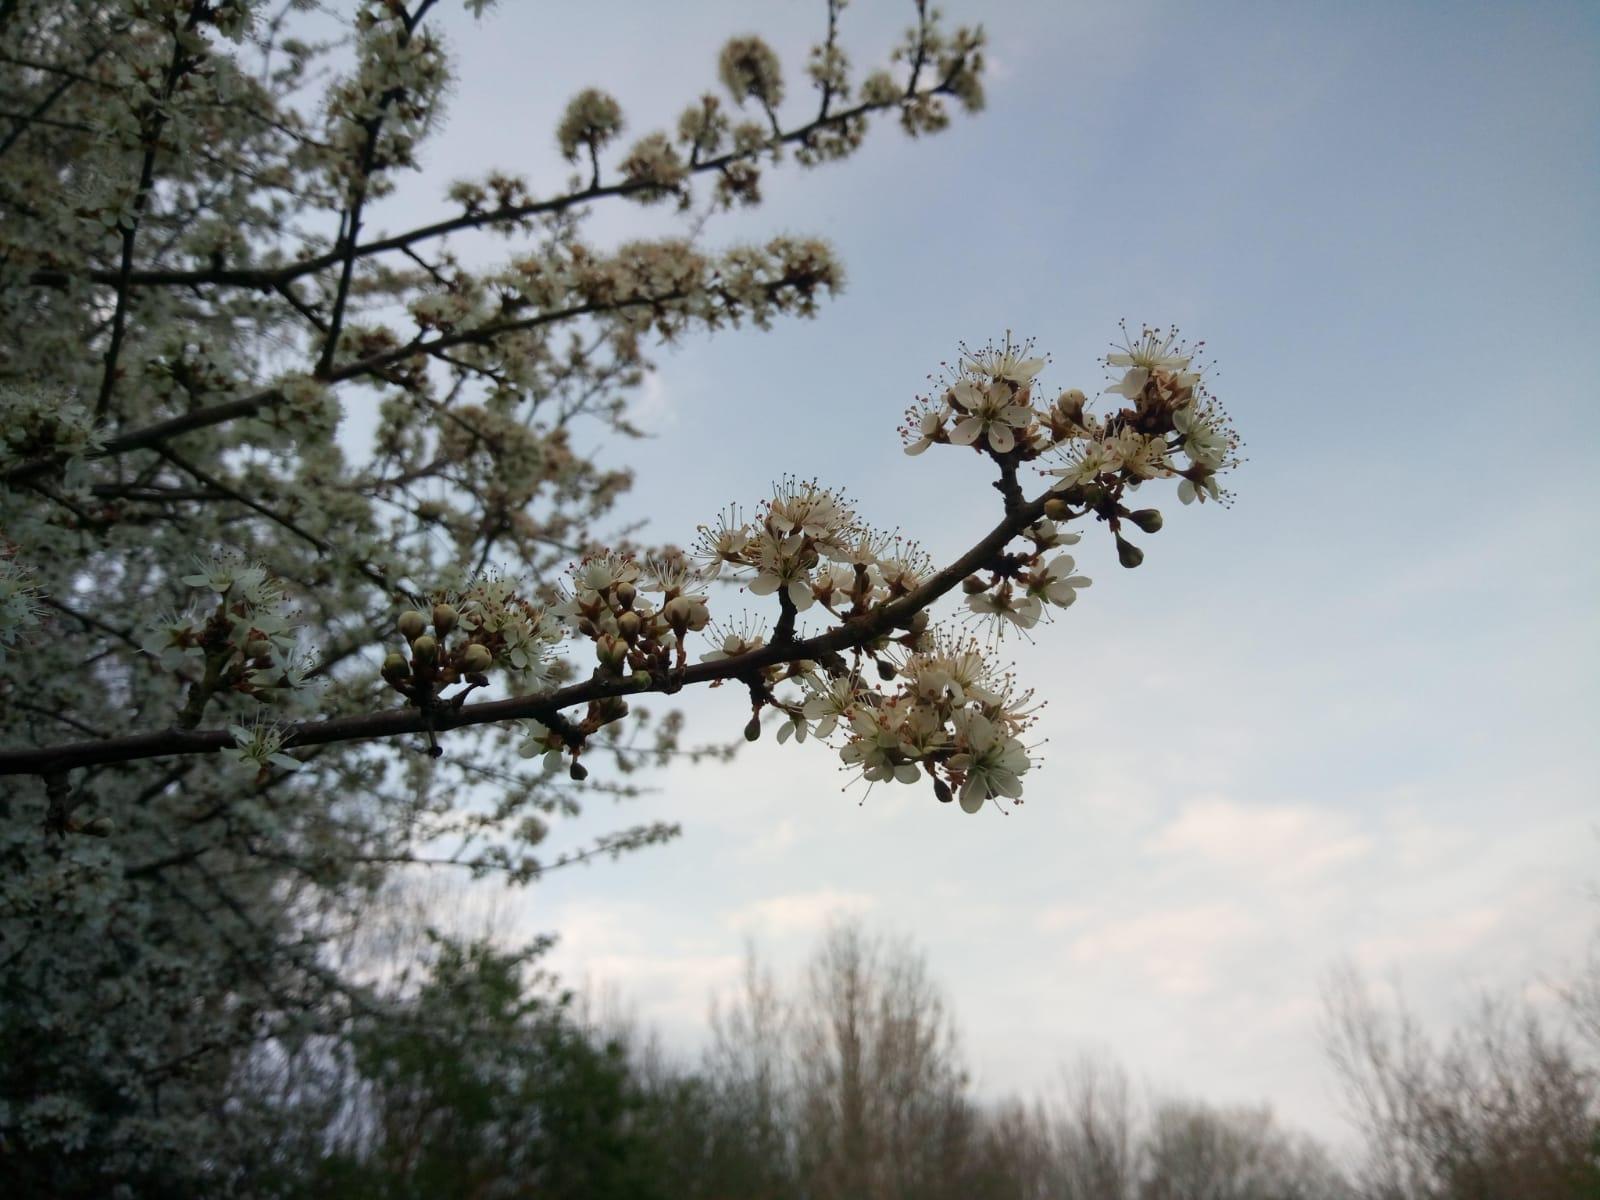 Blackthorn blossom in Giddings Wood